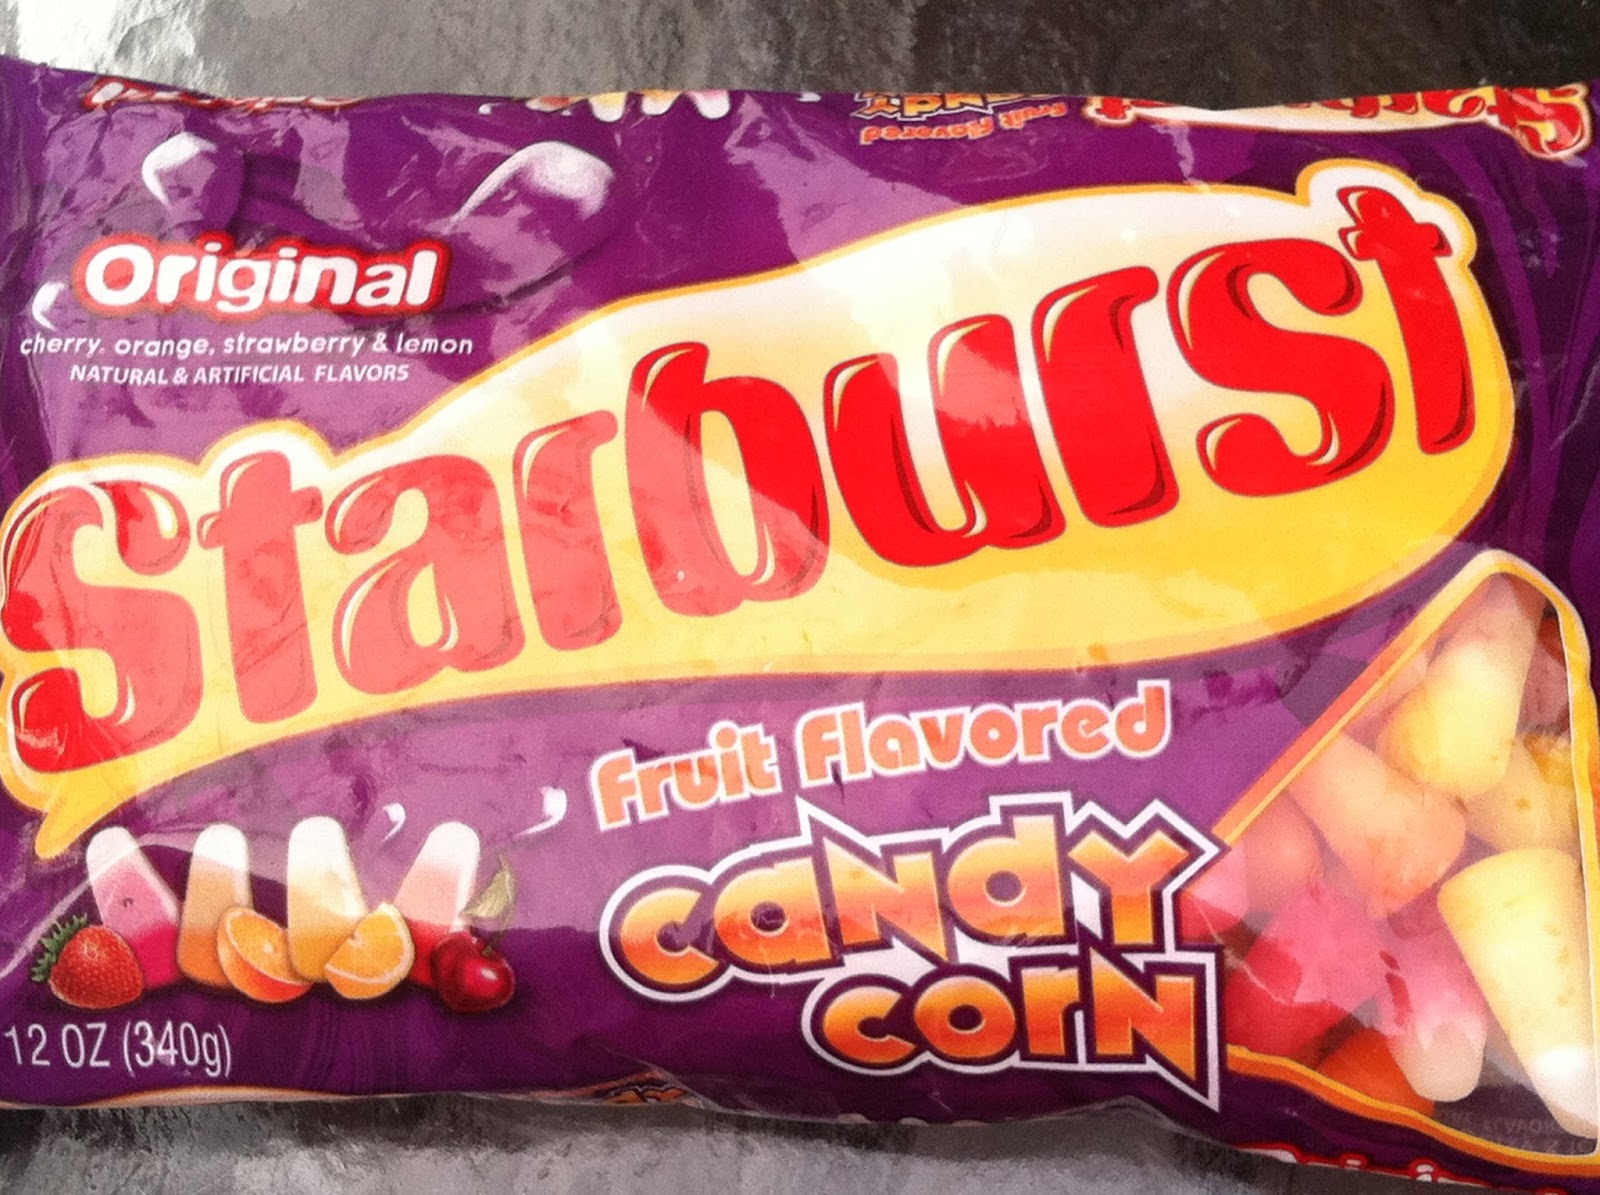 The Holidaze: Starburst Candy Corn